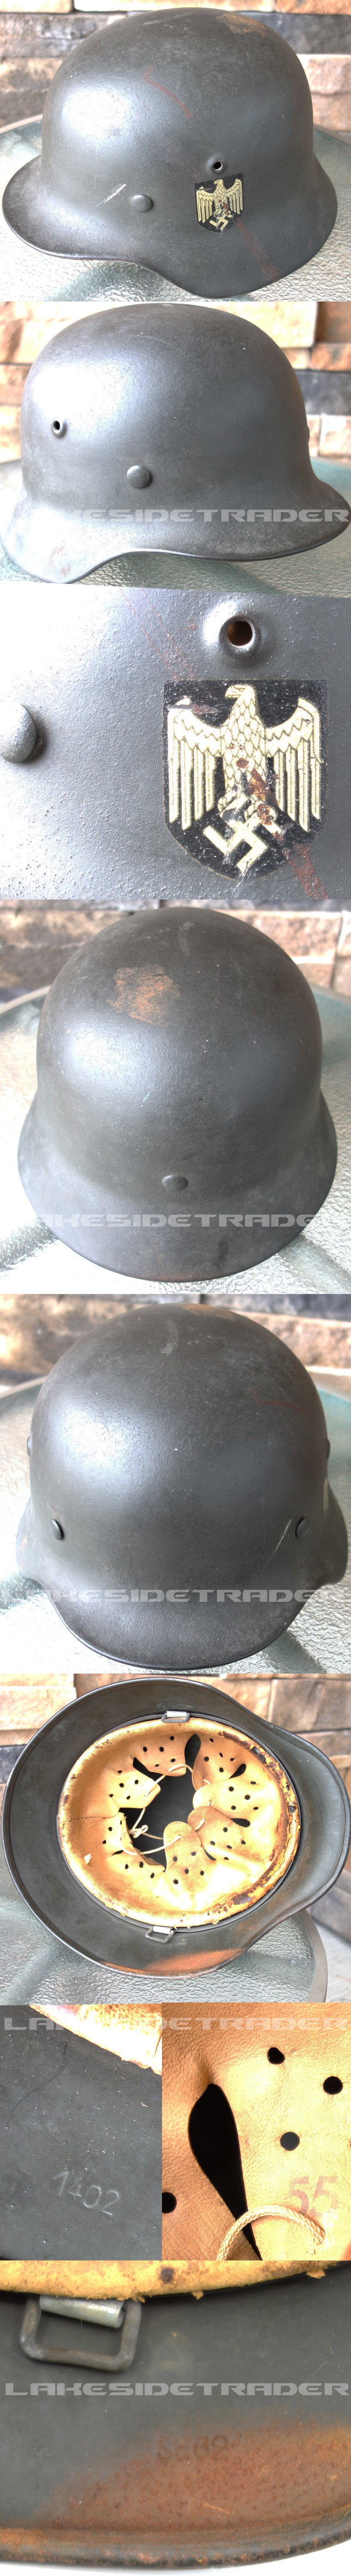 Single Decal M40 Army Helmet by SE-62